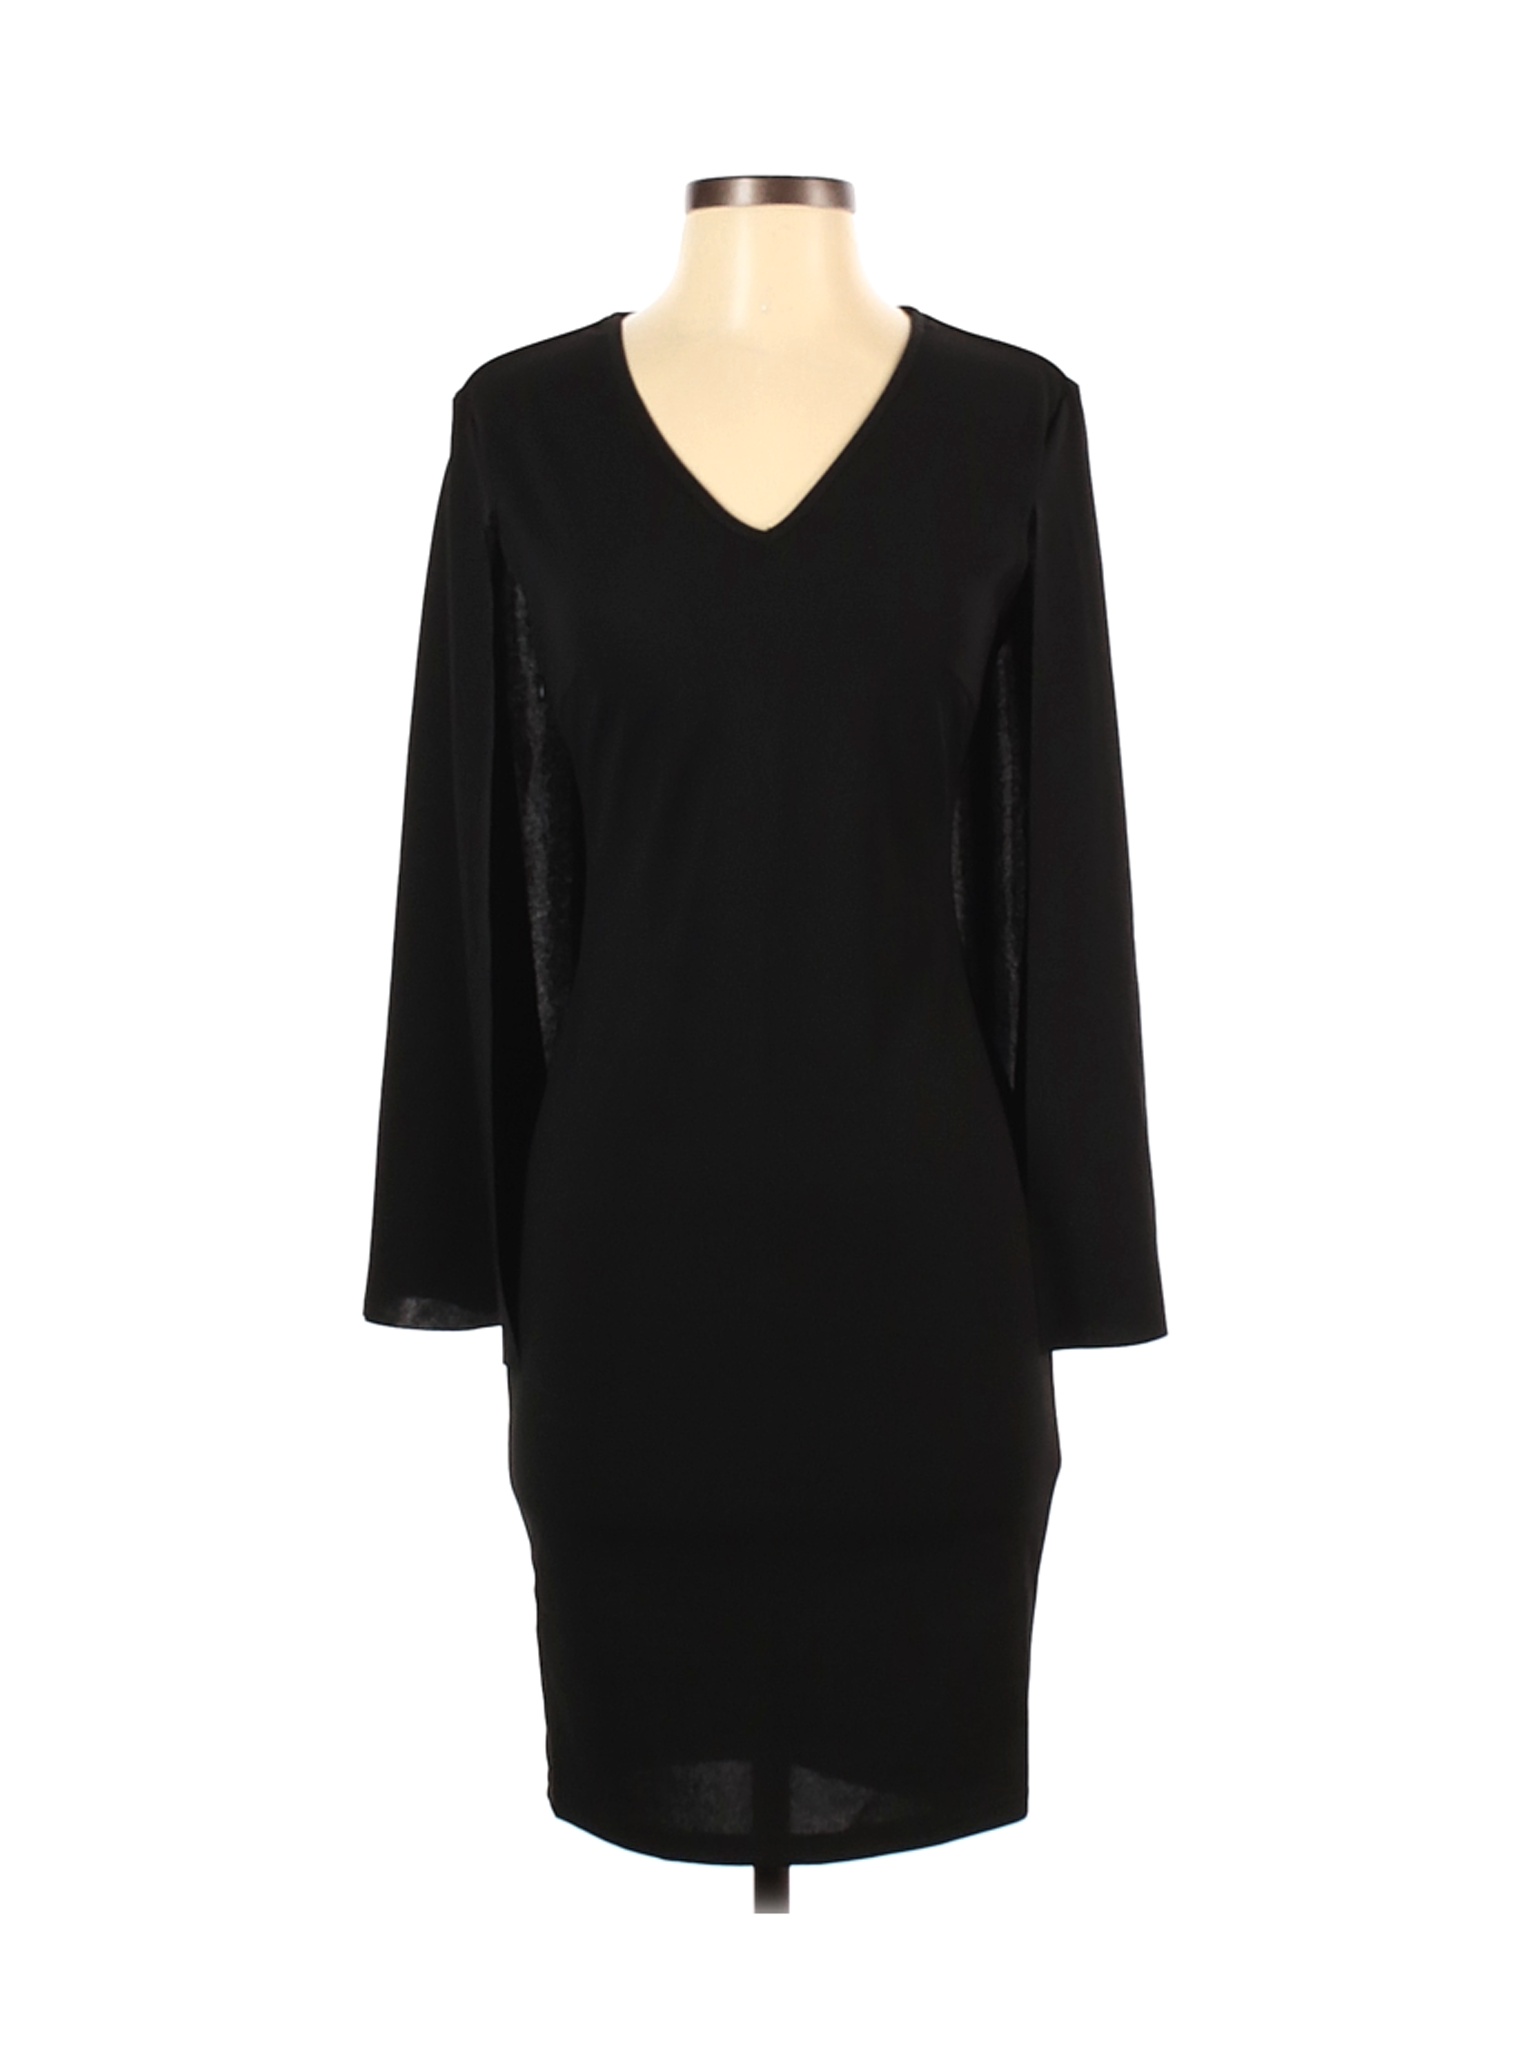 Shein Women Black Cocktail Dress S | eBay